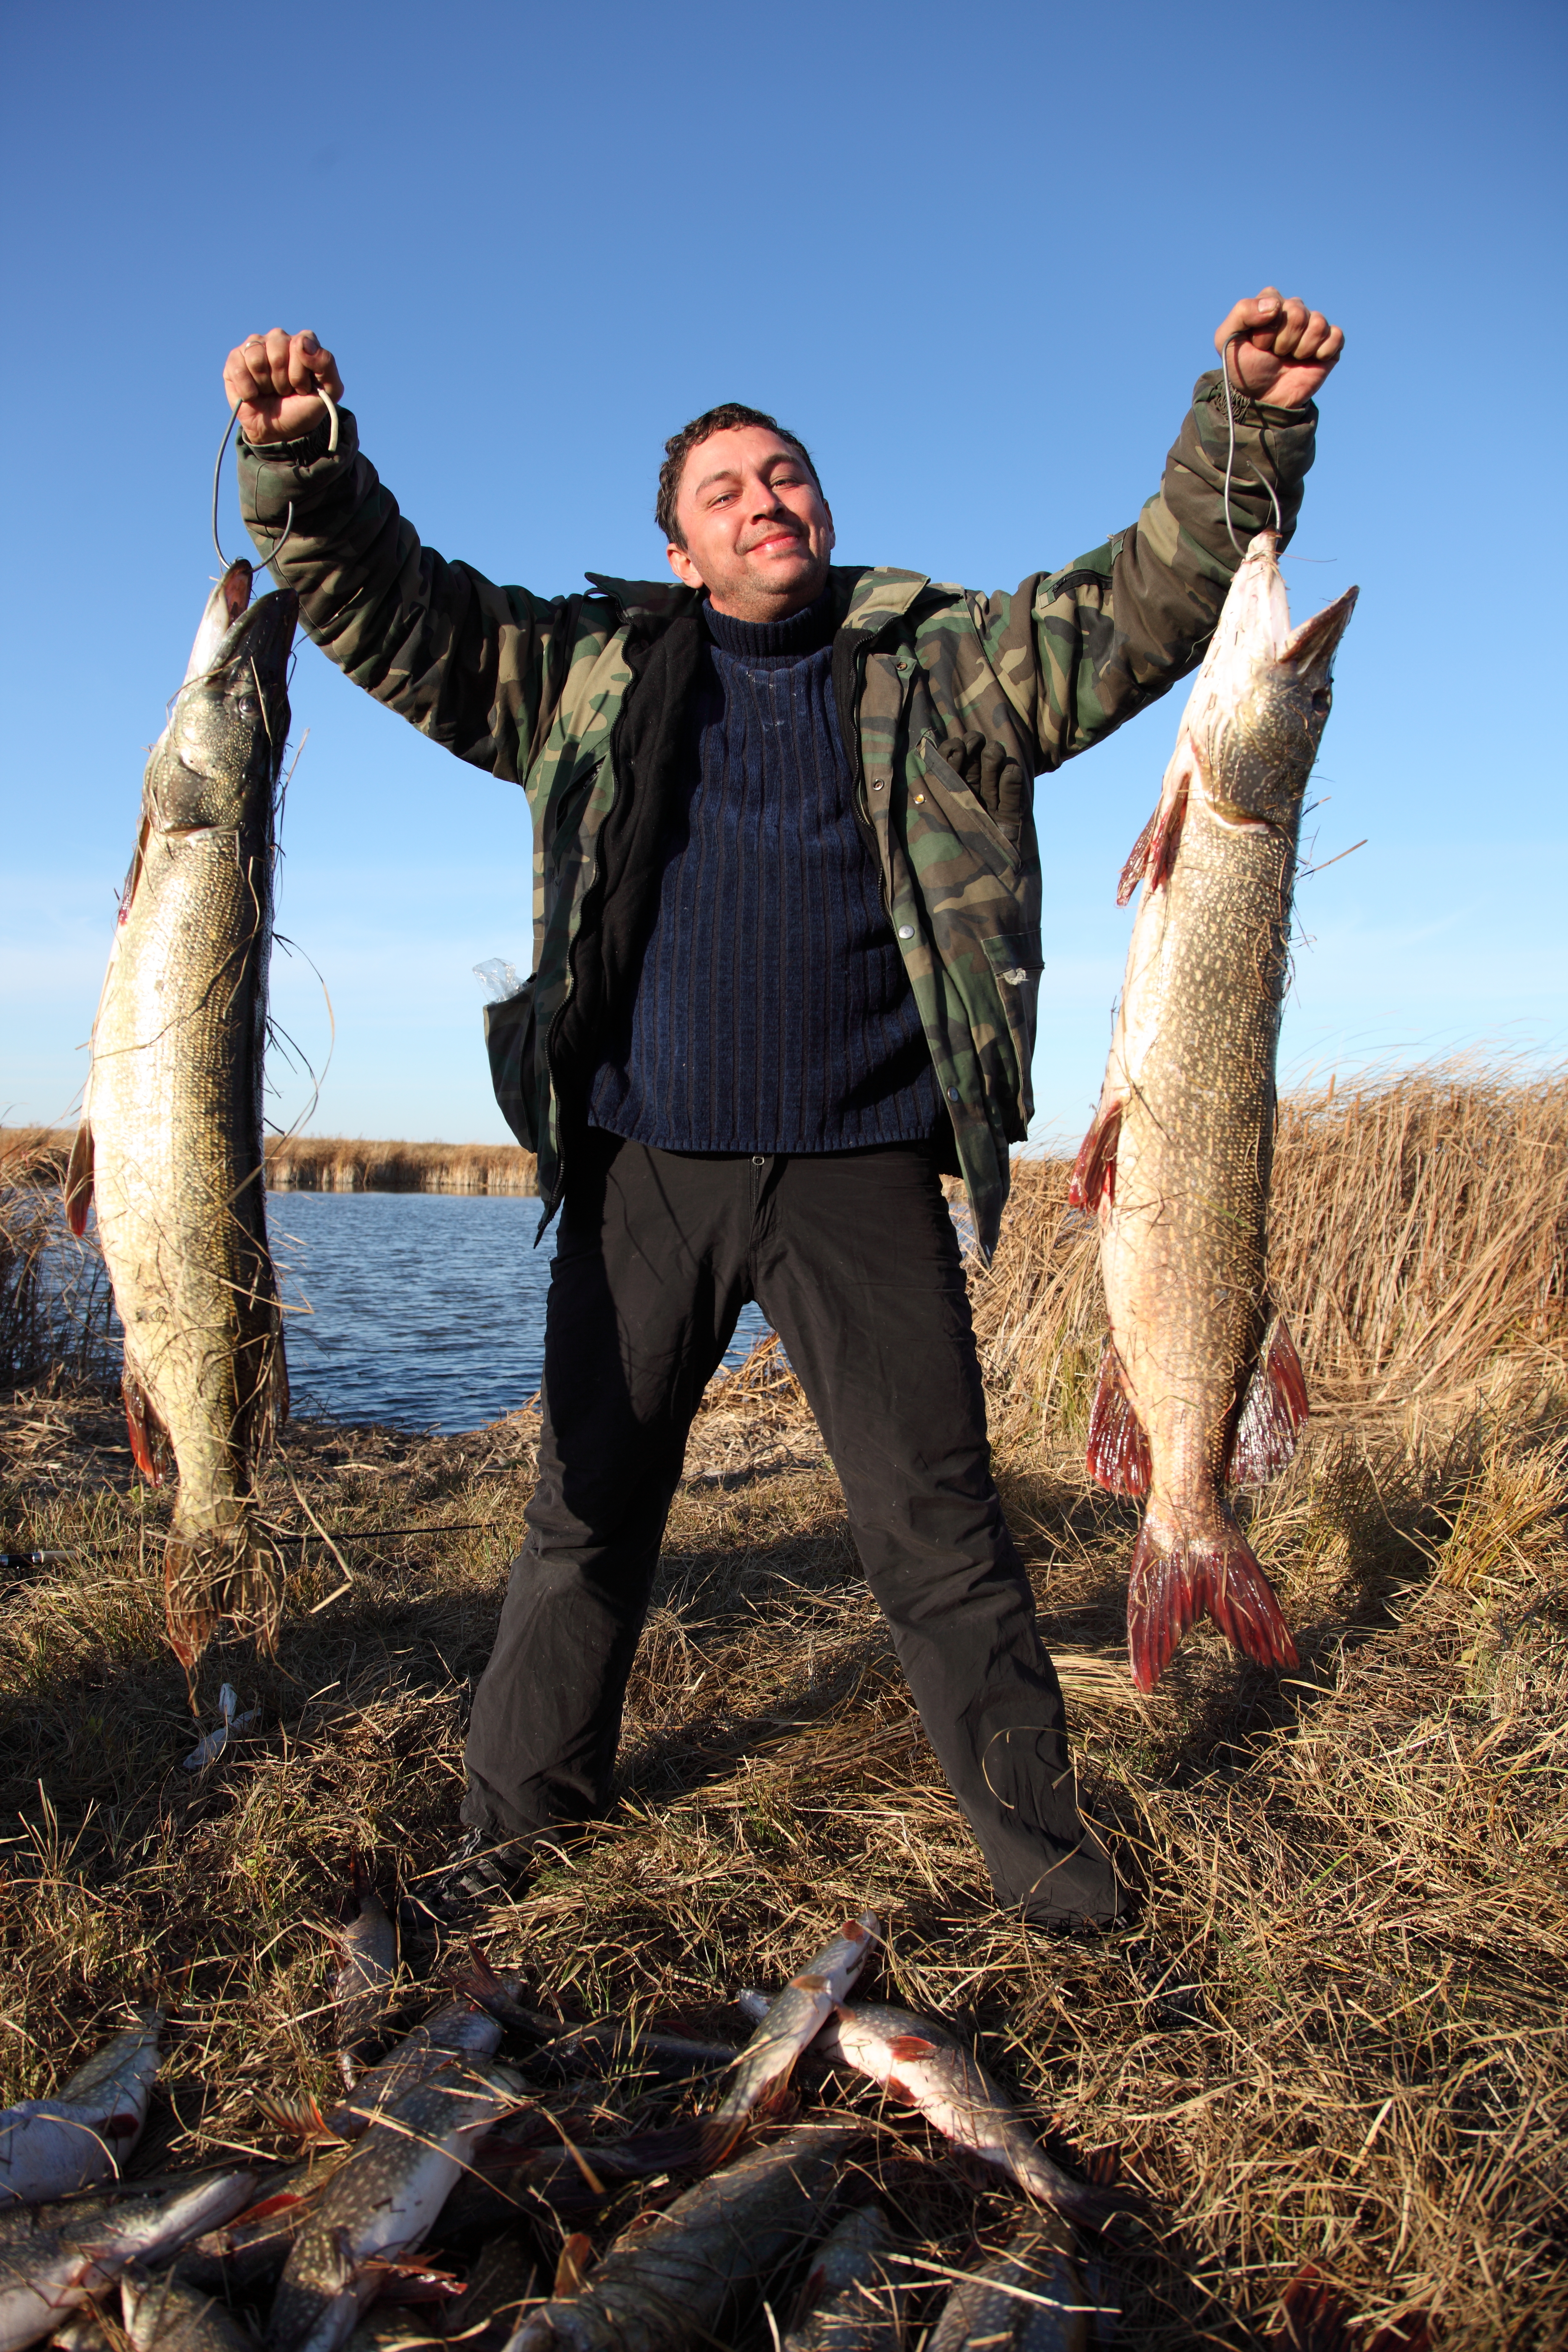 Local fisherman presenting his catch – © Poluyanenko Alexey Valerevich / Shutterstock